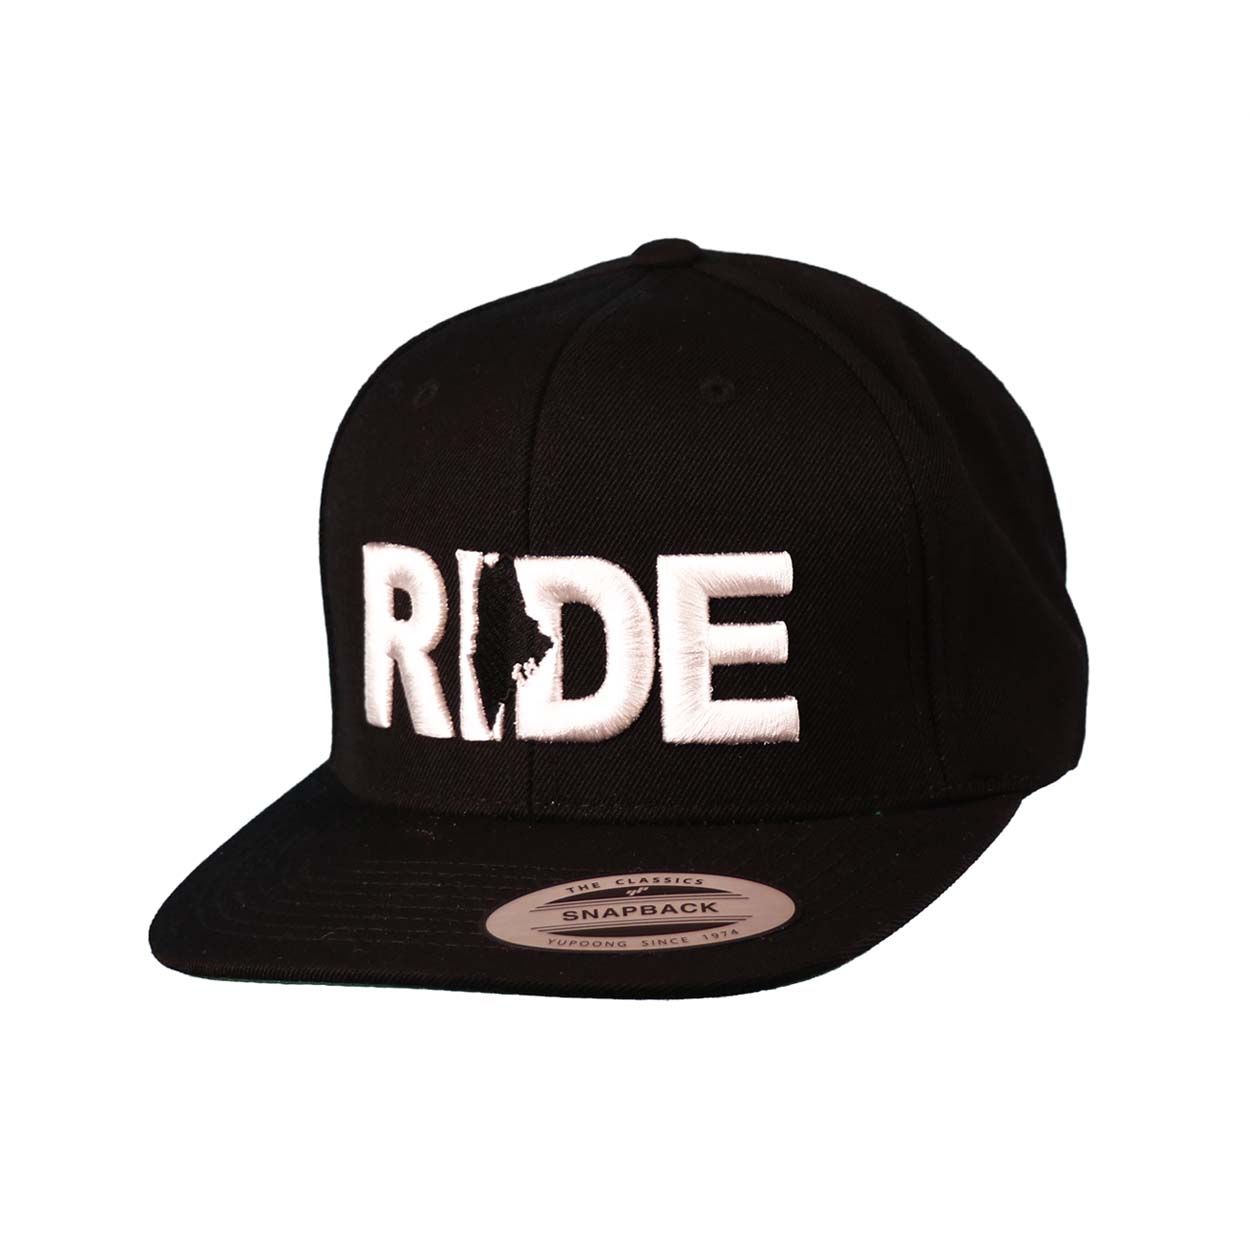 Ride Maine Classic Embroidered  Snapback Flat Brim Hat Black